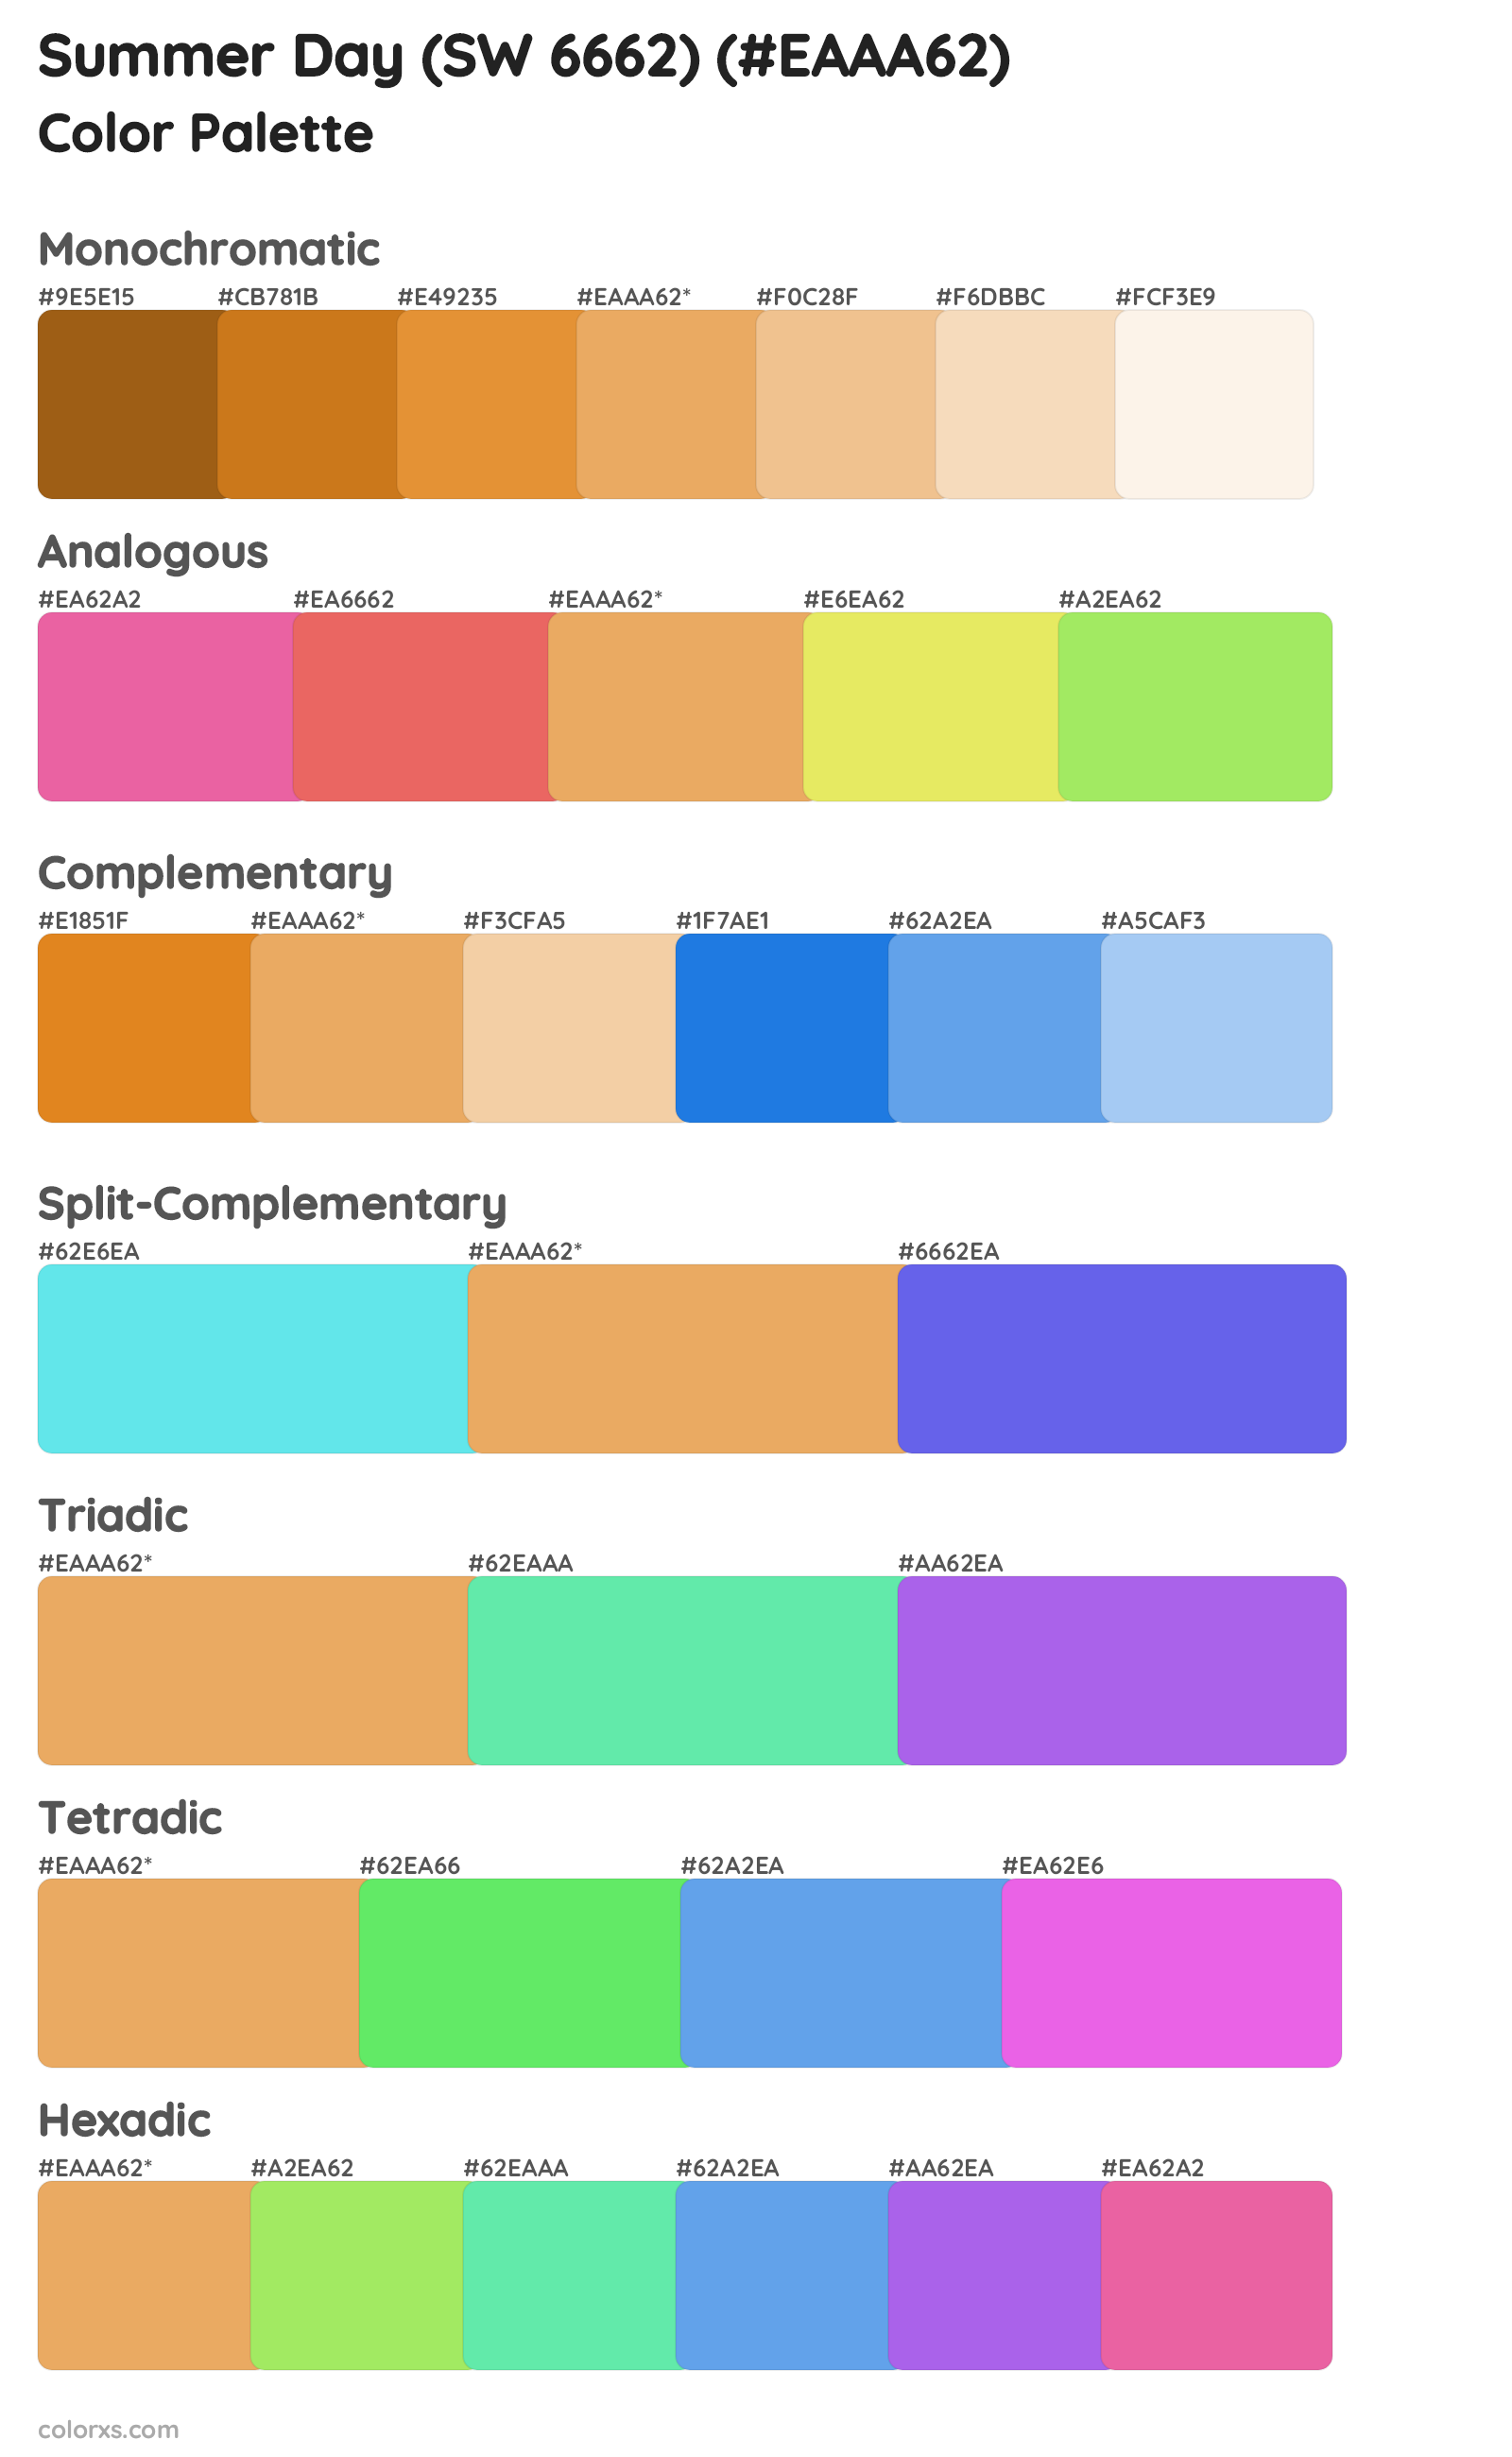 Summer Day (SW 6662) Color Scheme Palettes